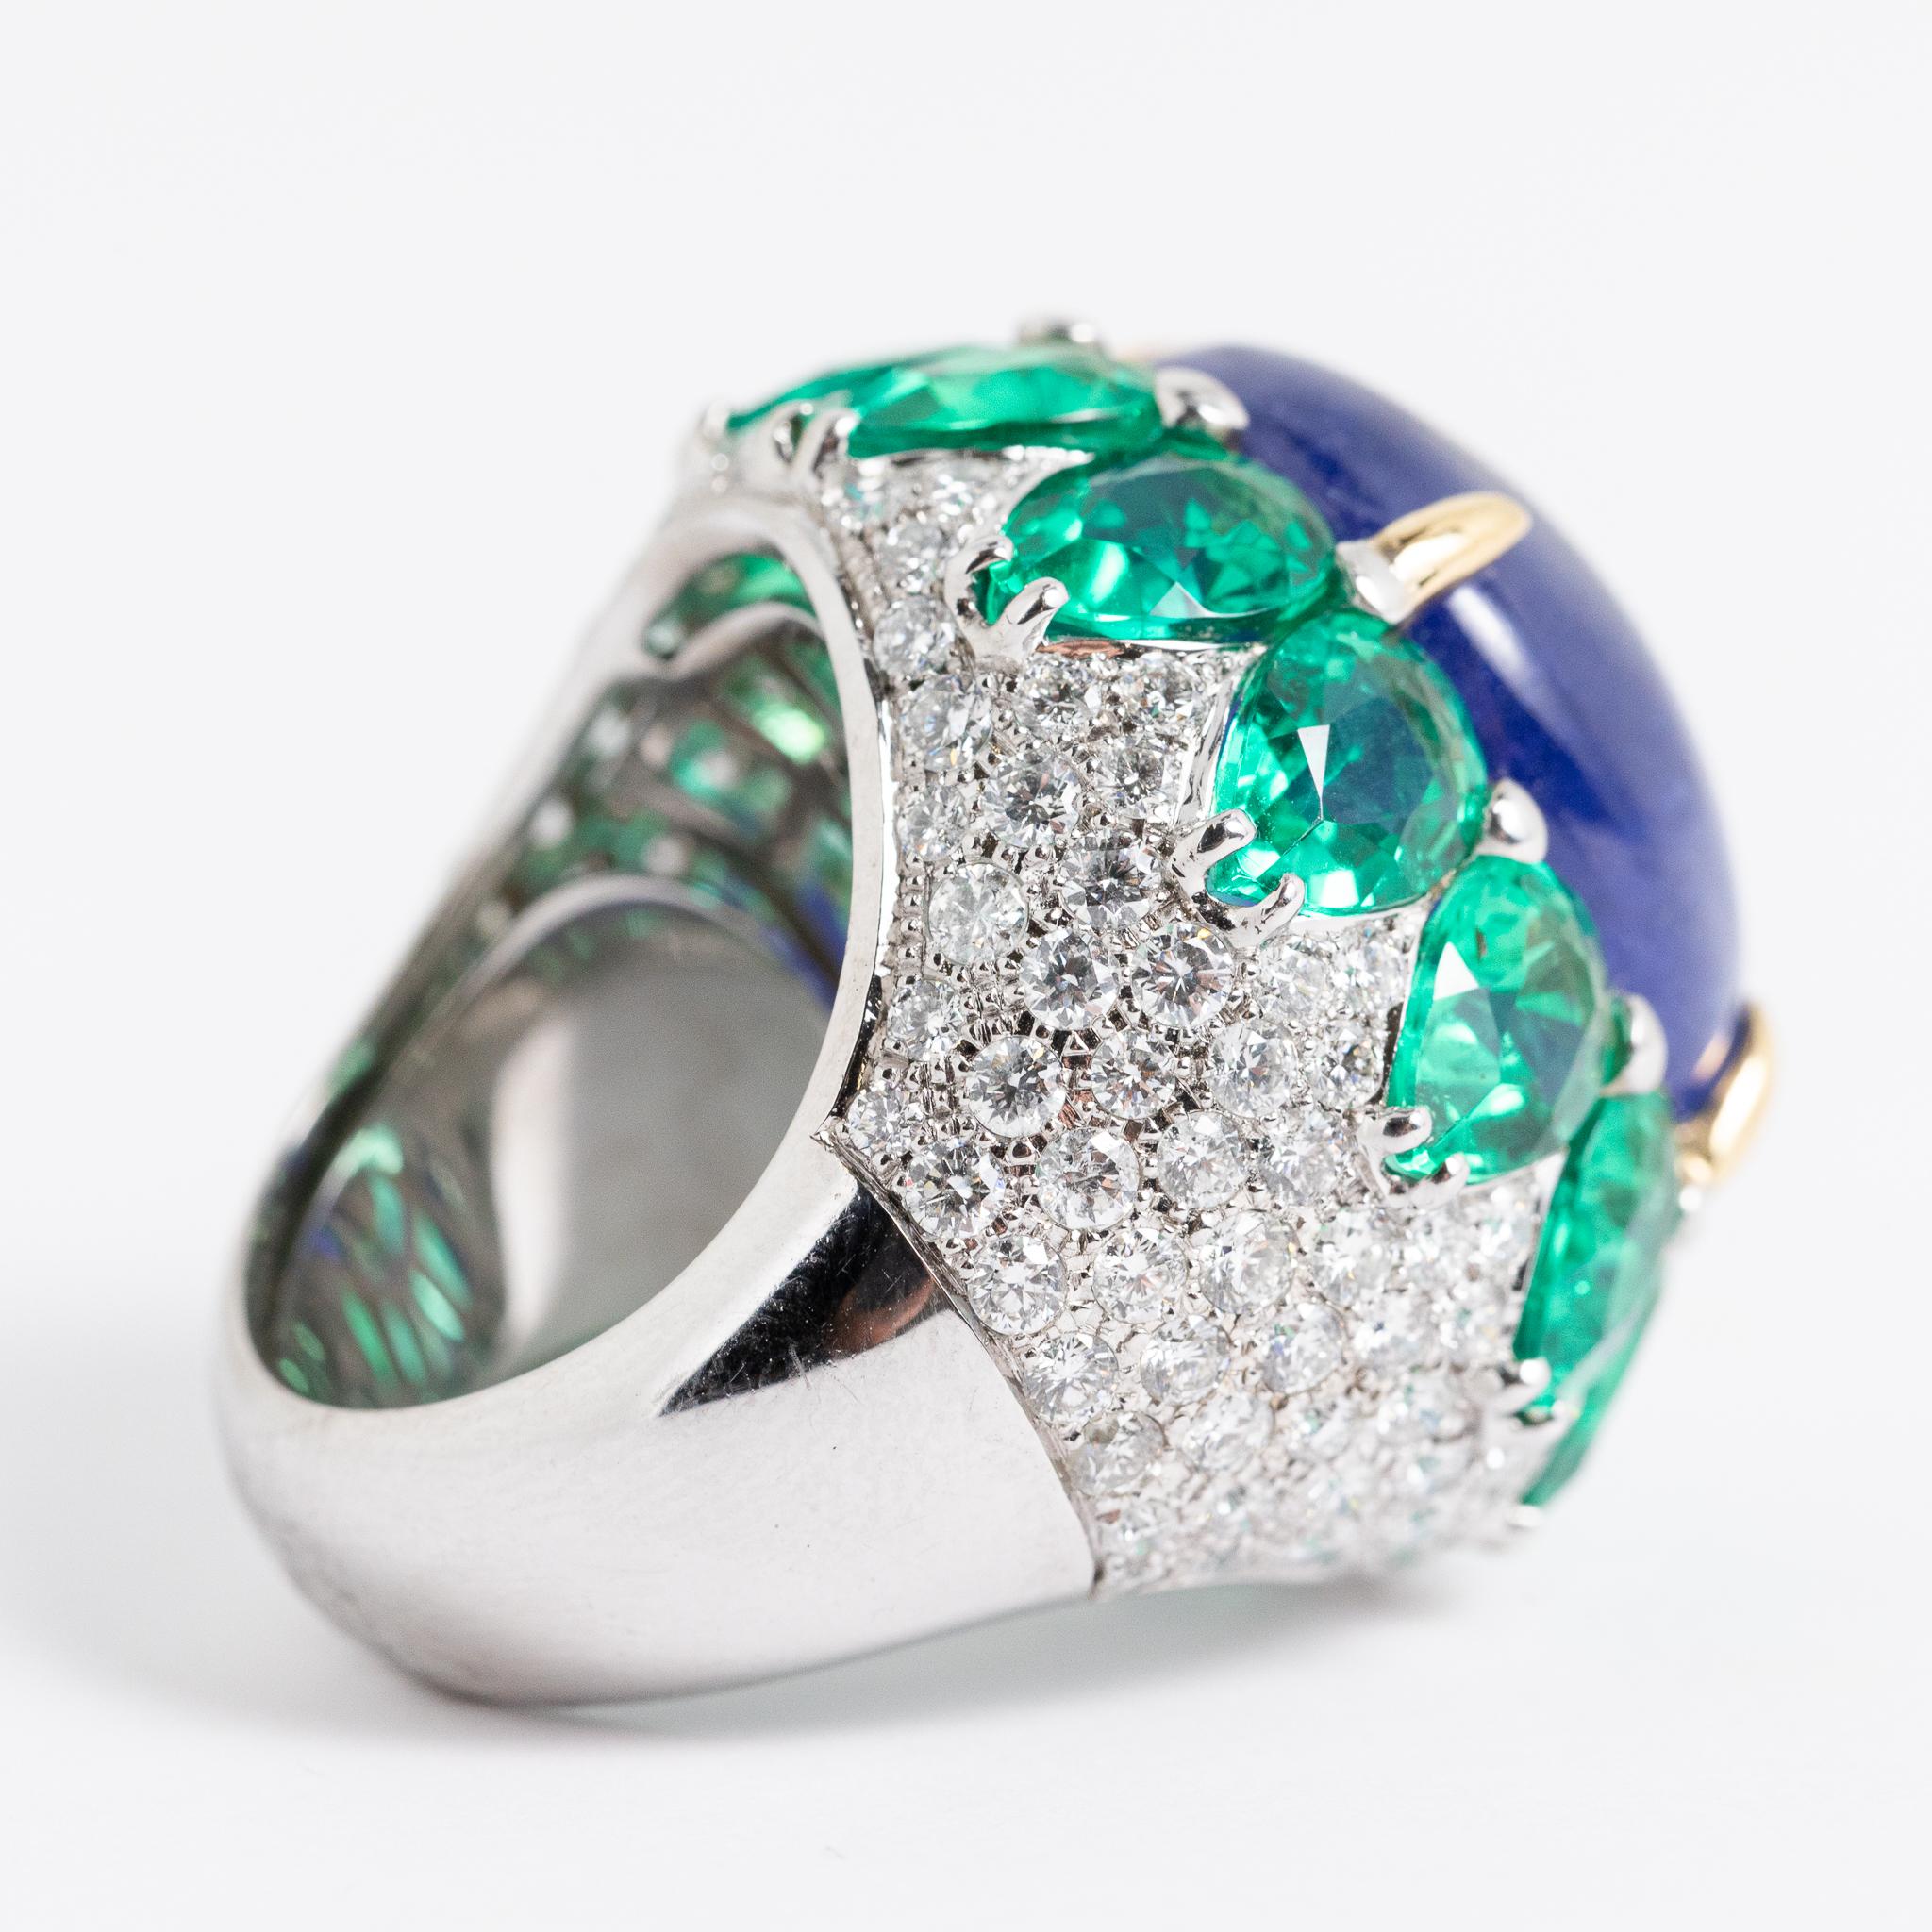 Fraleoni 18 Kt. White Gold Diamond Tanzanite Lab-created Emerald Cocktail Ring For Sale 3